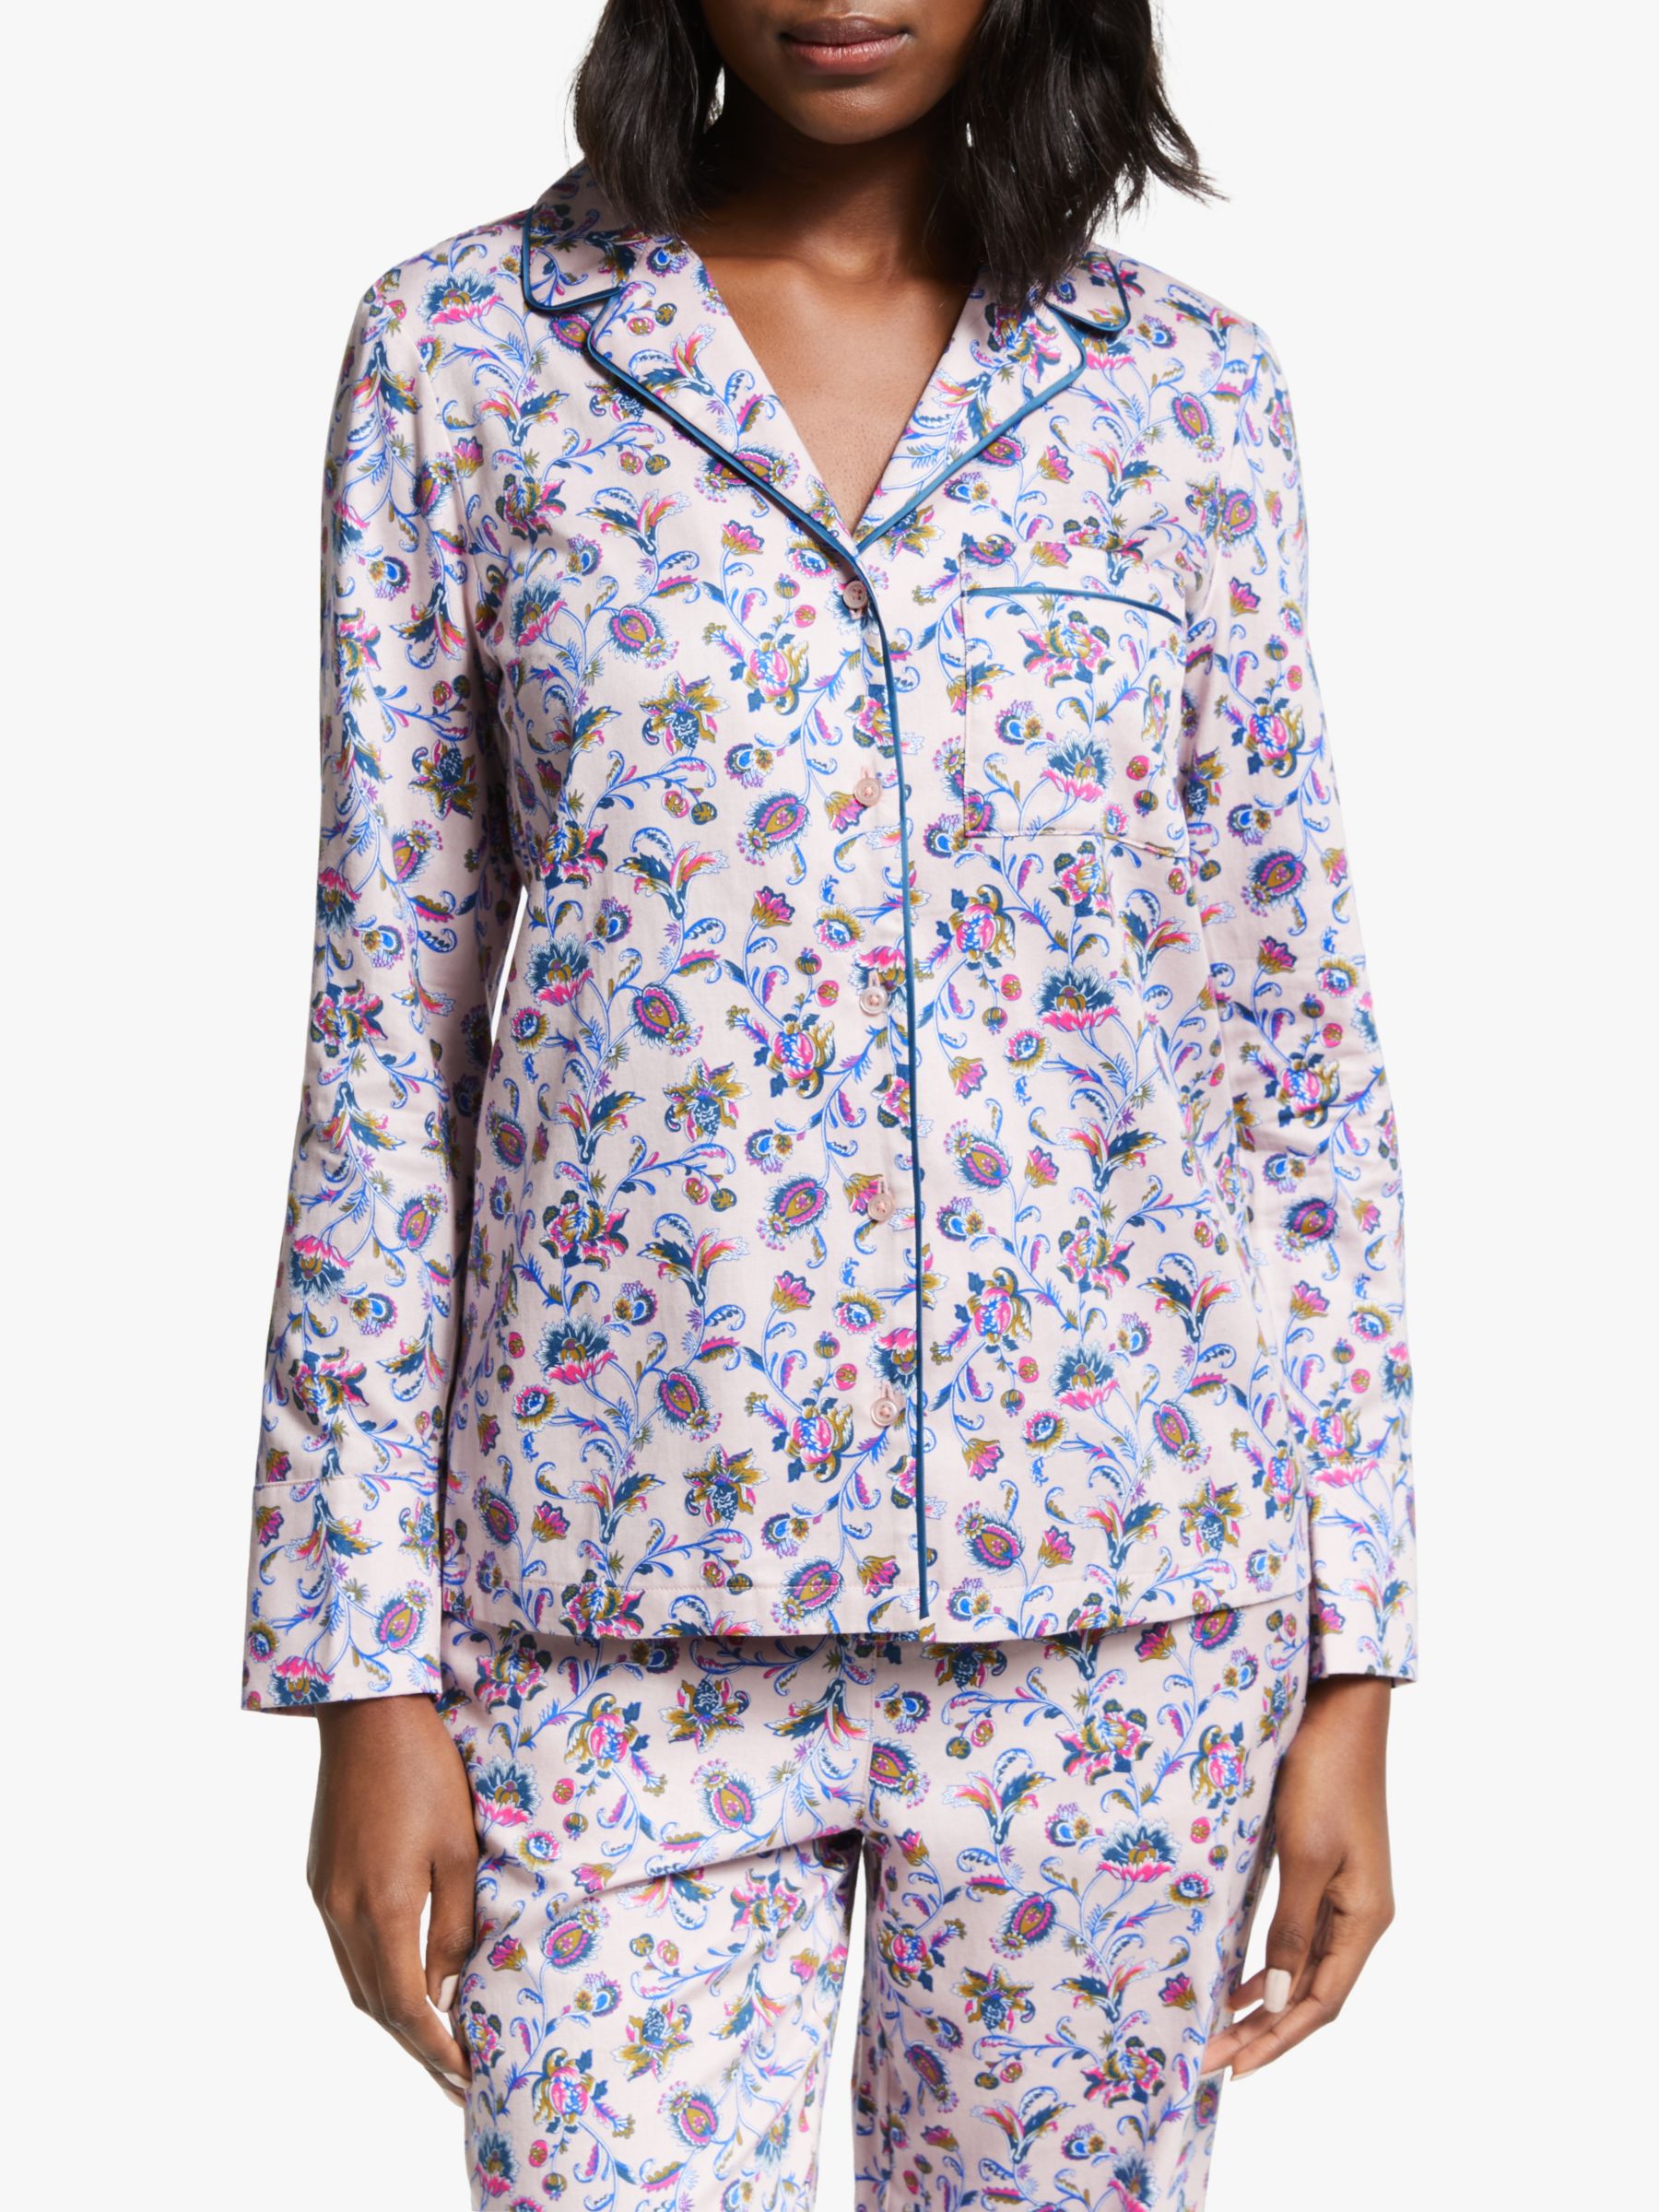 Boden Janie Cotton Pyjama Shirt, Milkshake